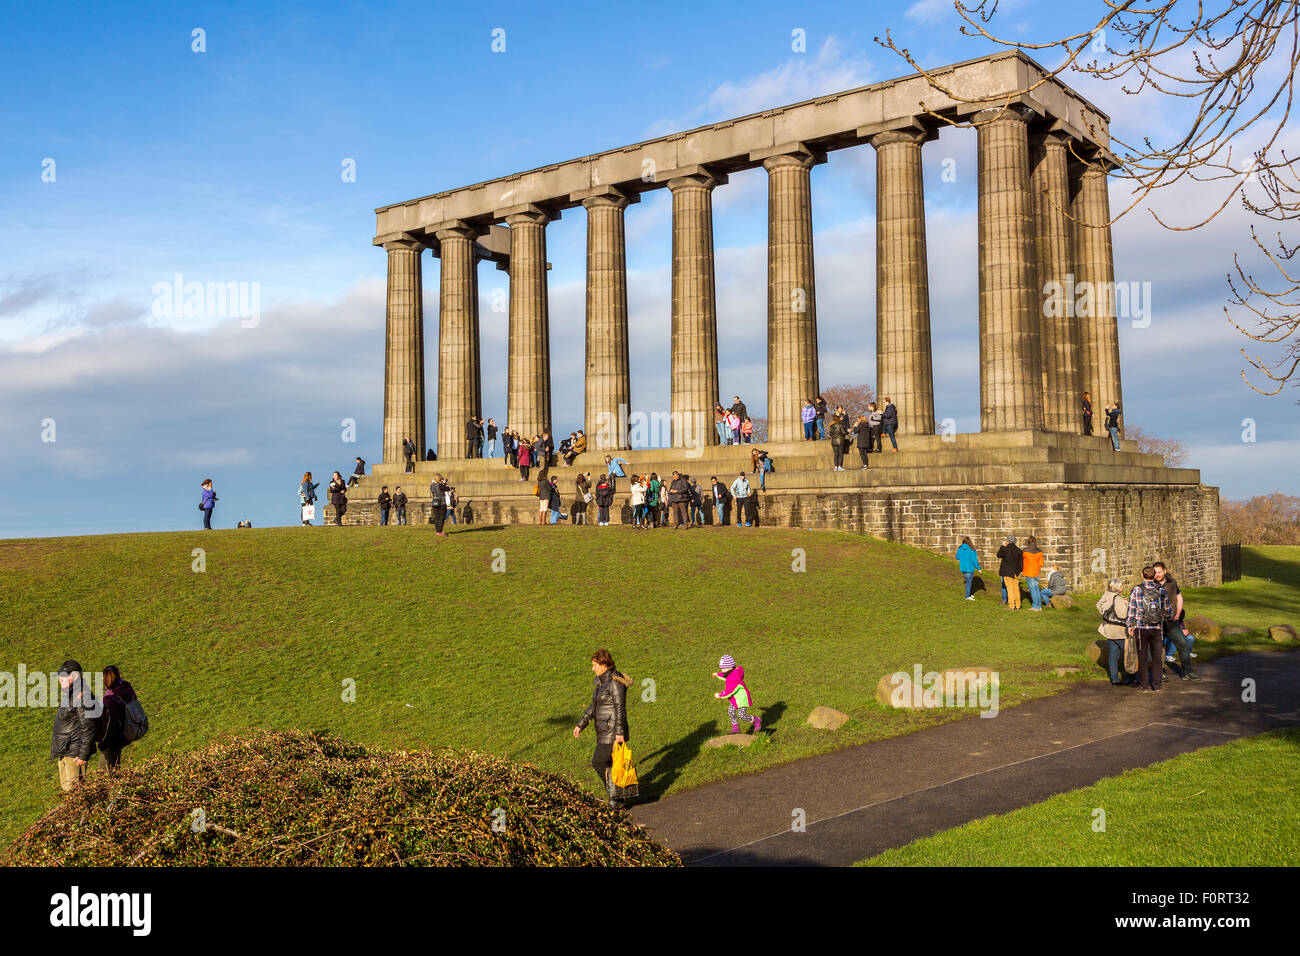 National Monument on Calton Hill, Edinburgh, City of Edinburgh, Scotland, United Kingdom, Europe. Stock Photo